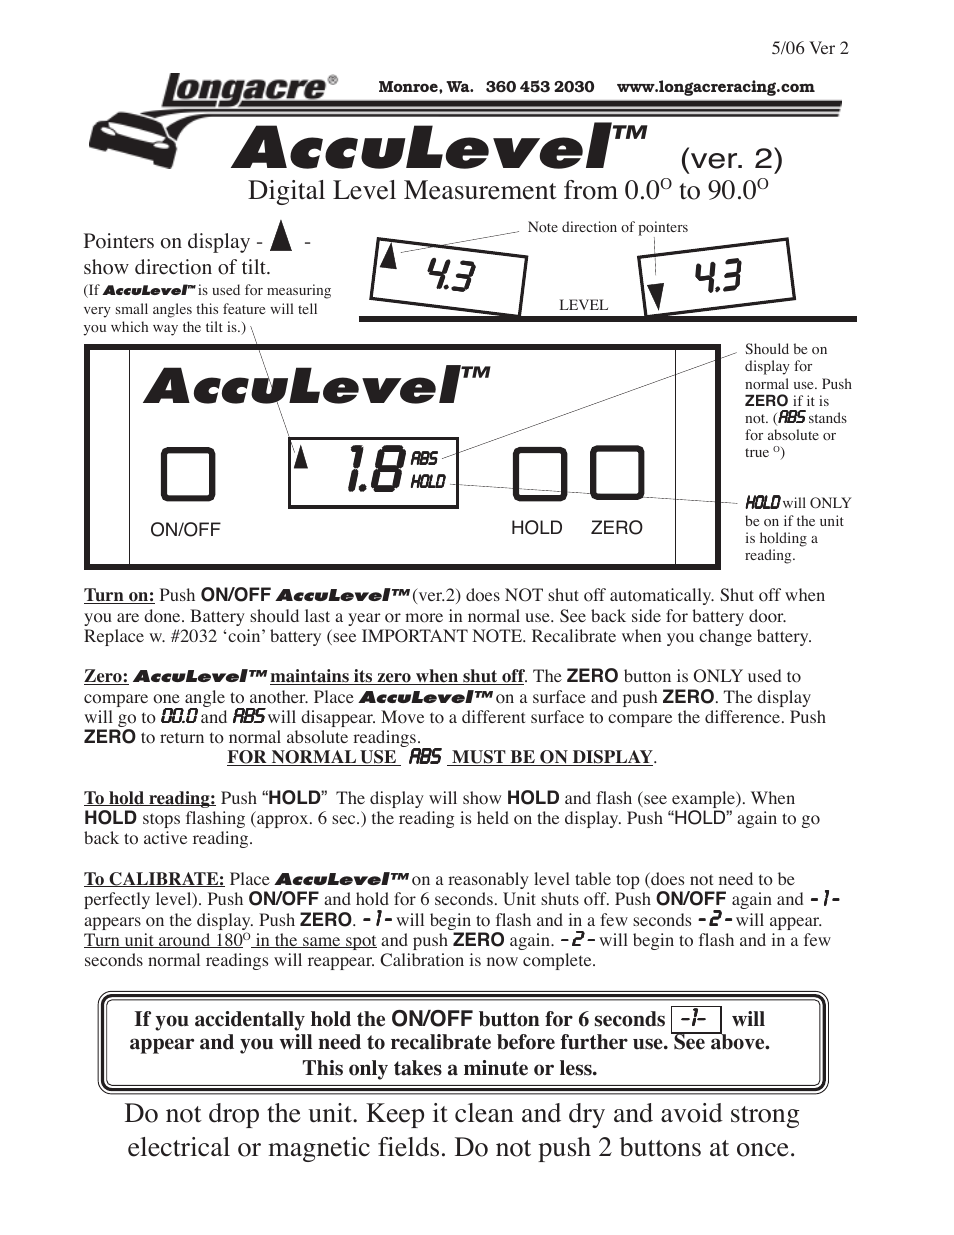 78310 AccuLevel (version 2)